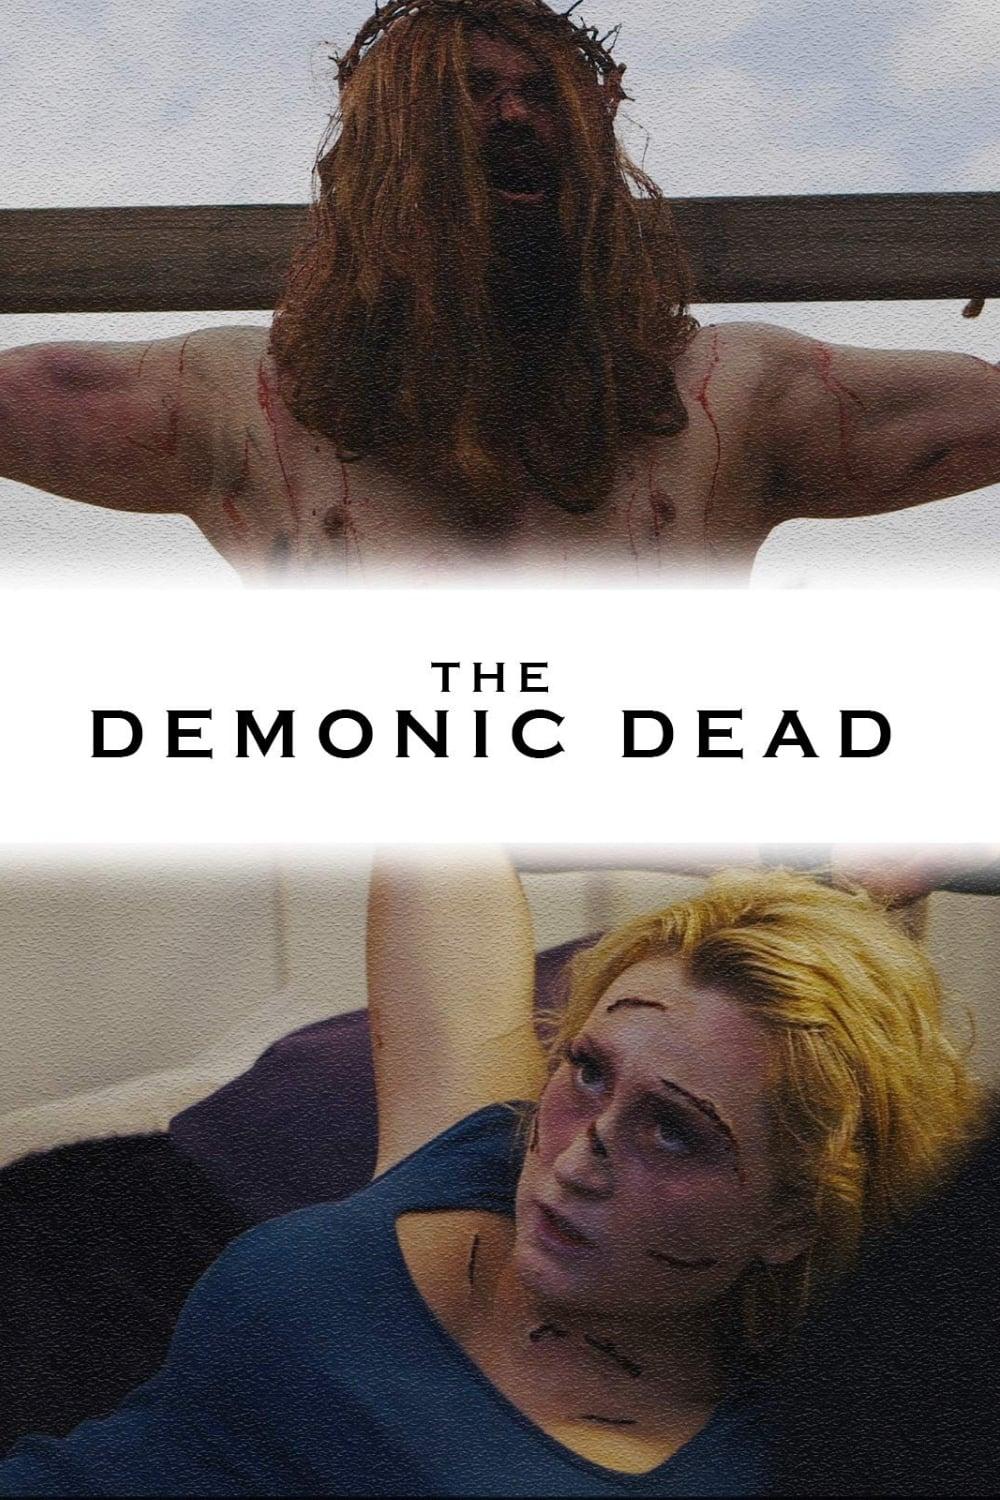 The Demonic Dead poster